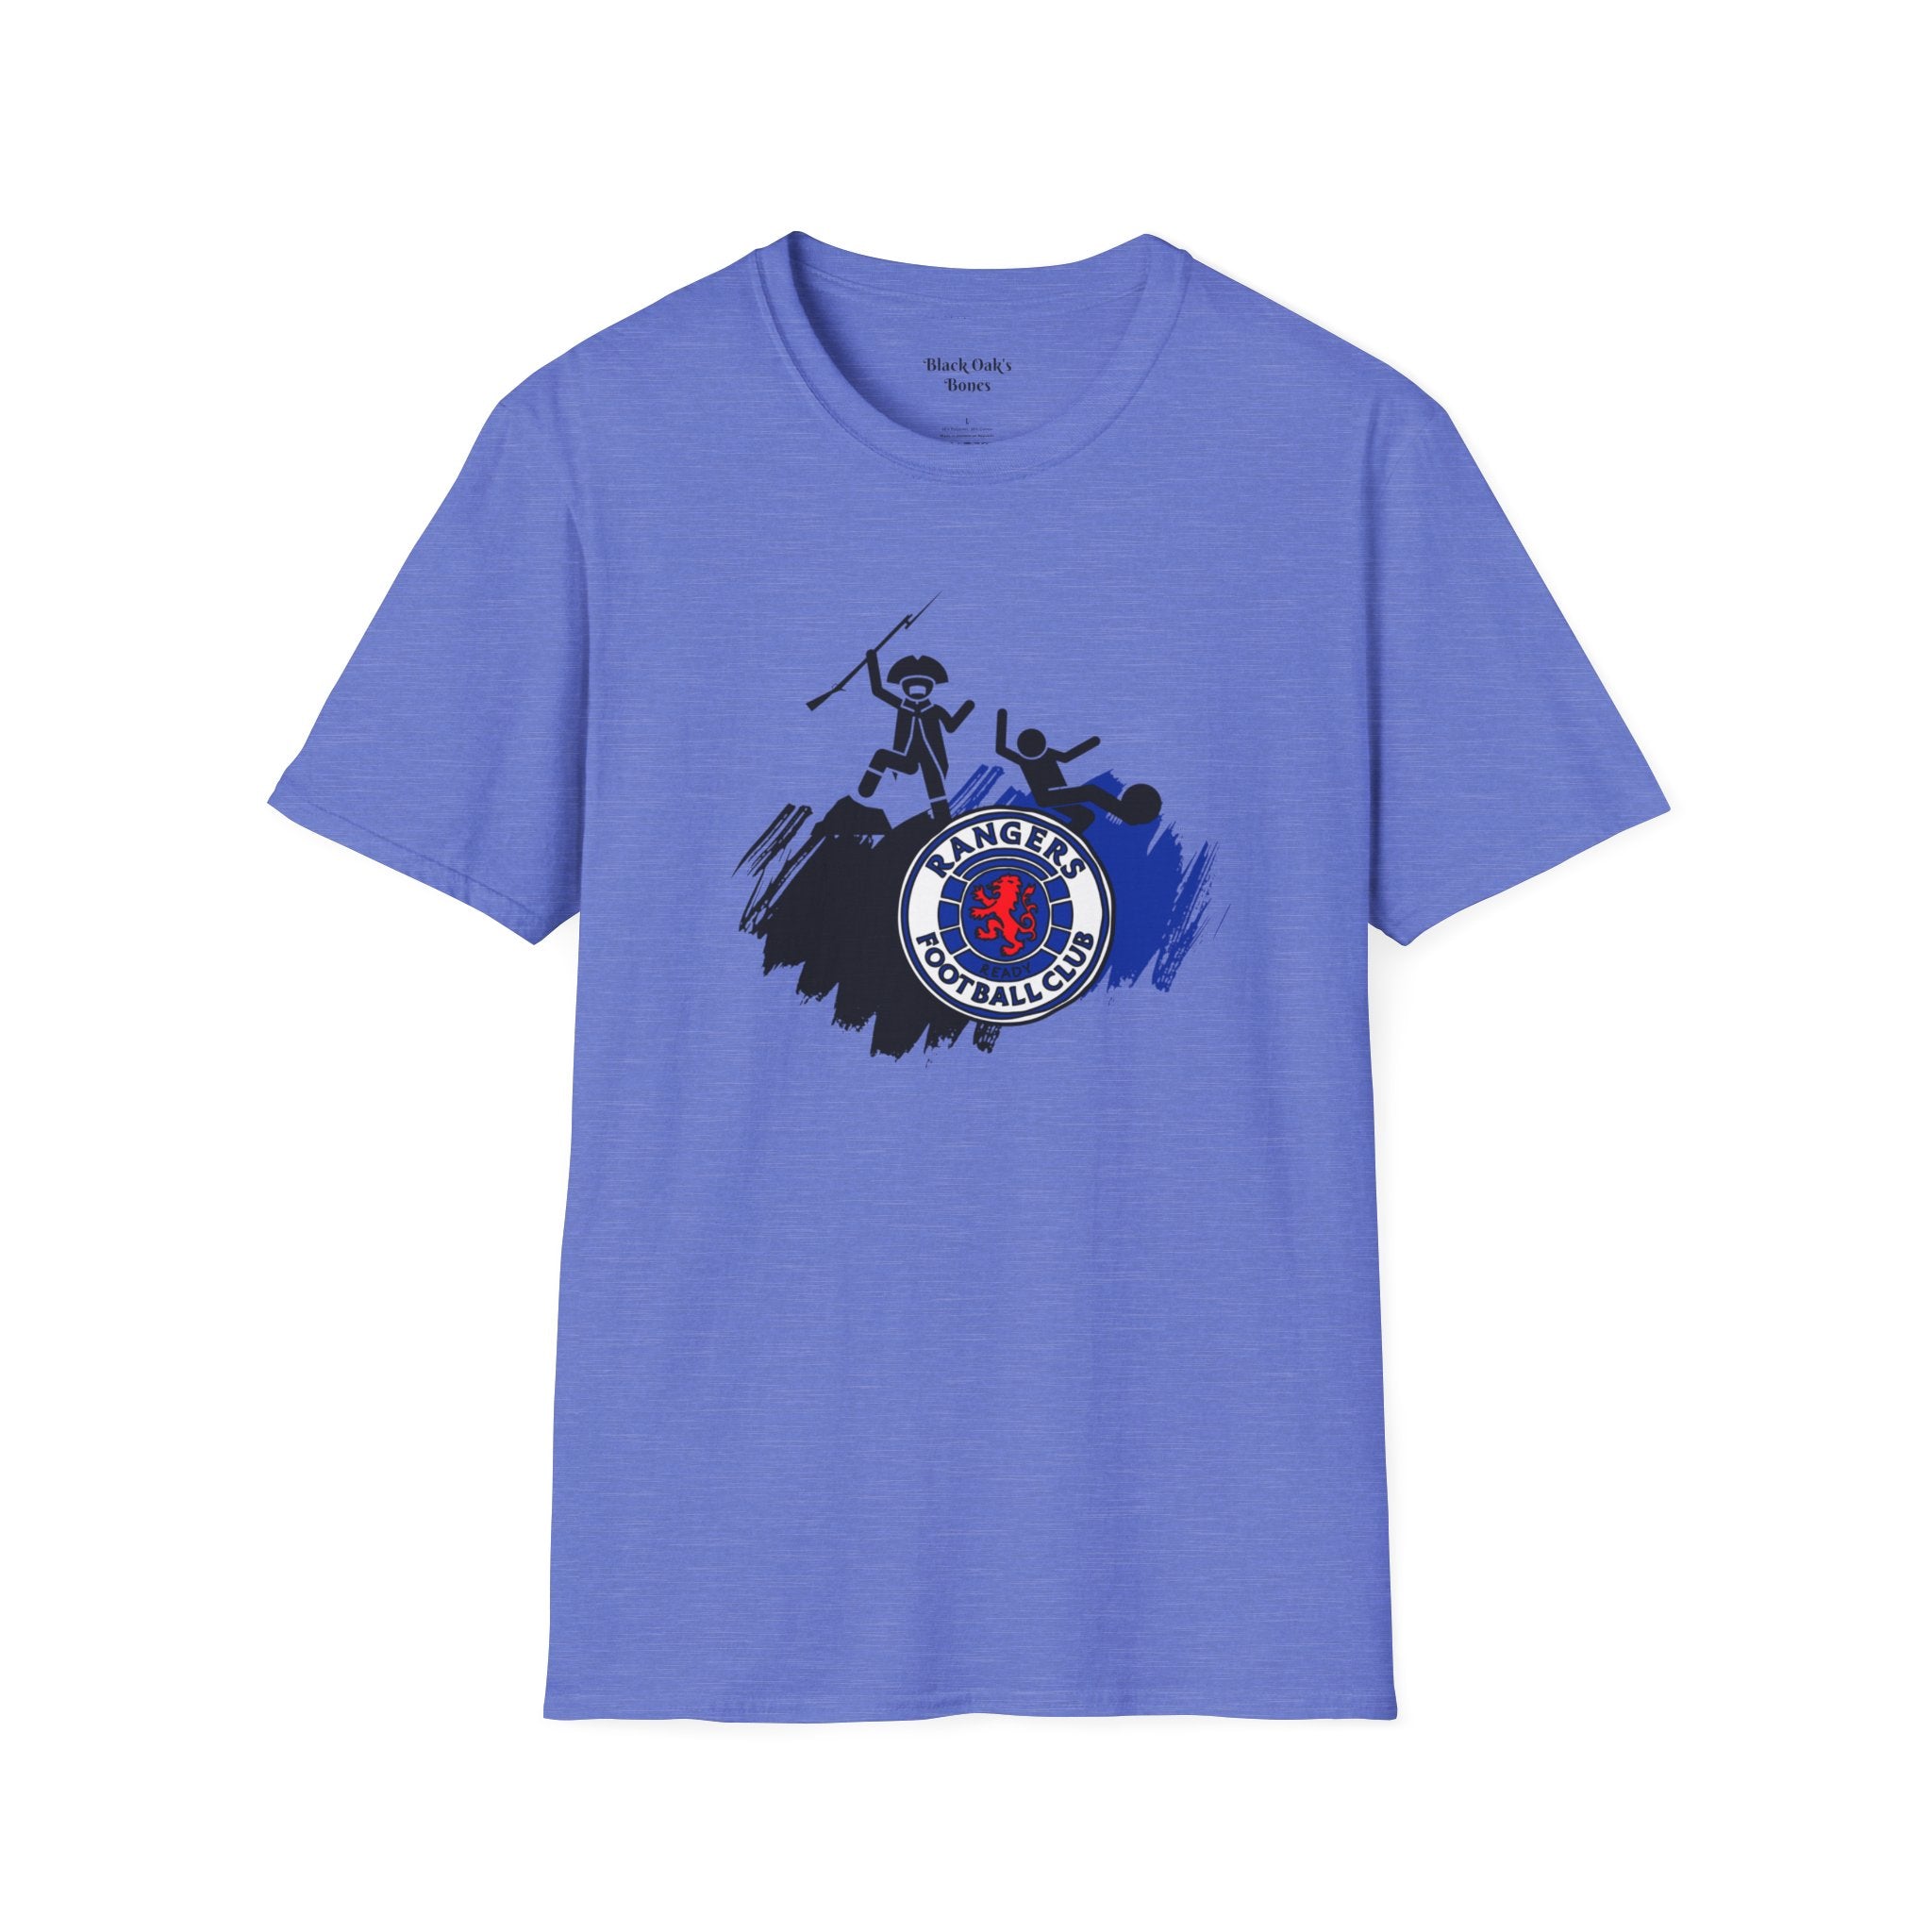 FURDreams “Rangers” II Softstyle T-Shirt